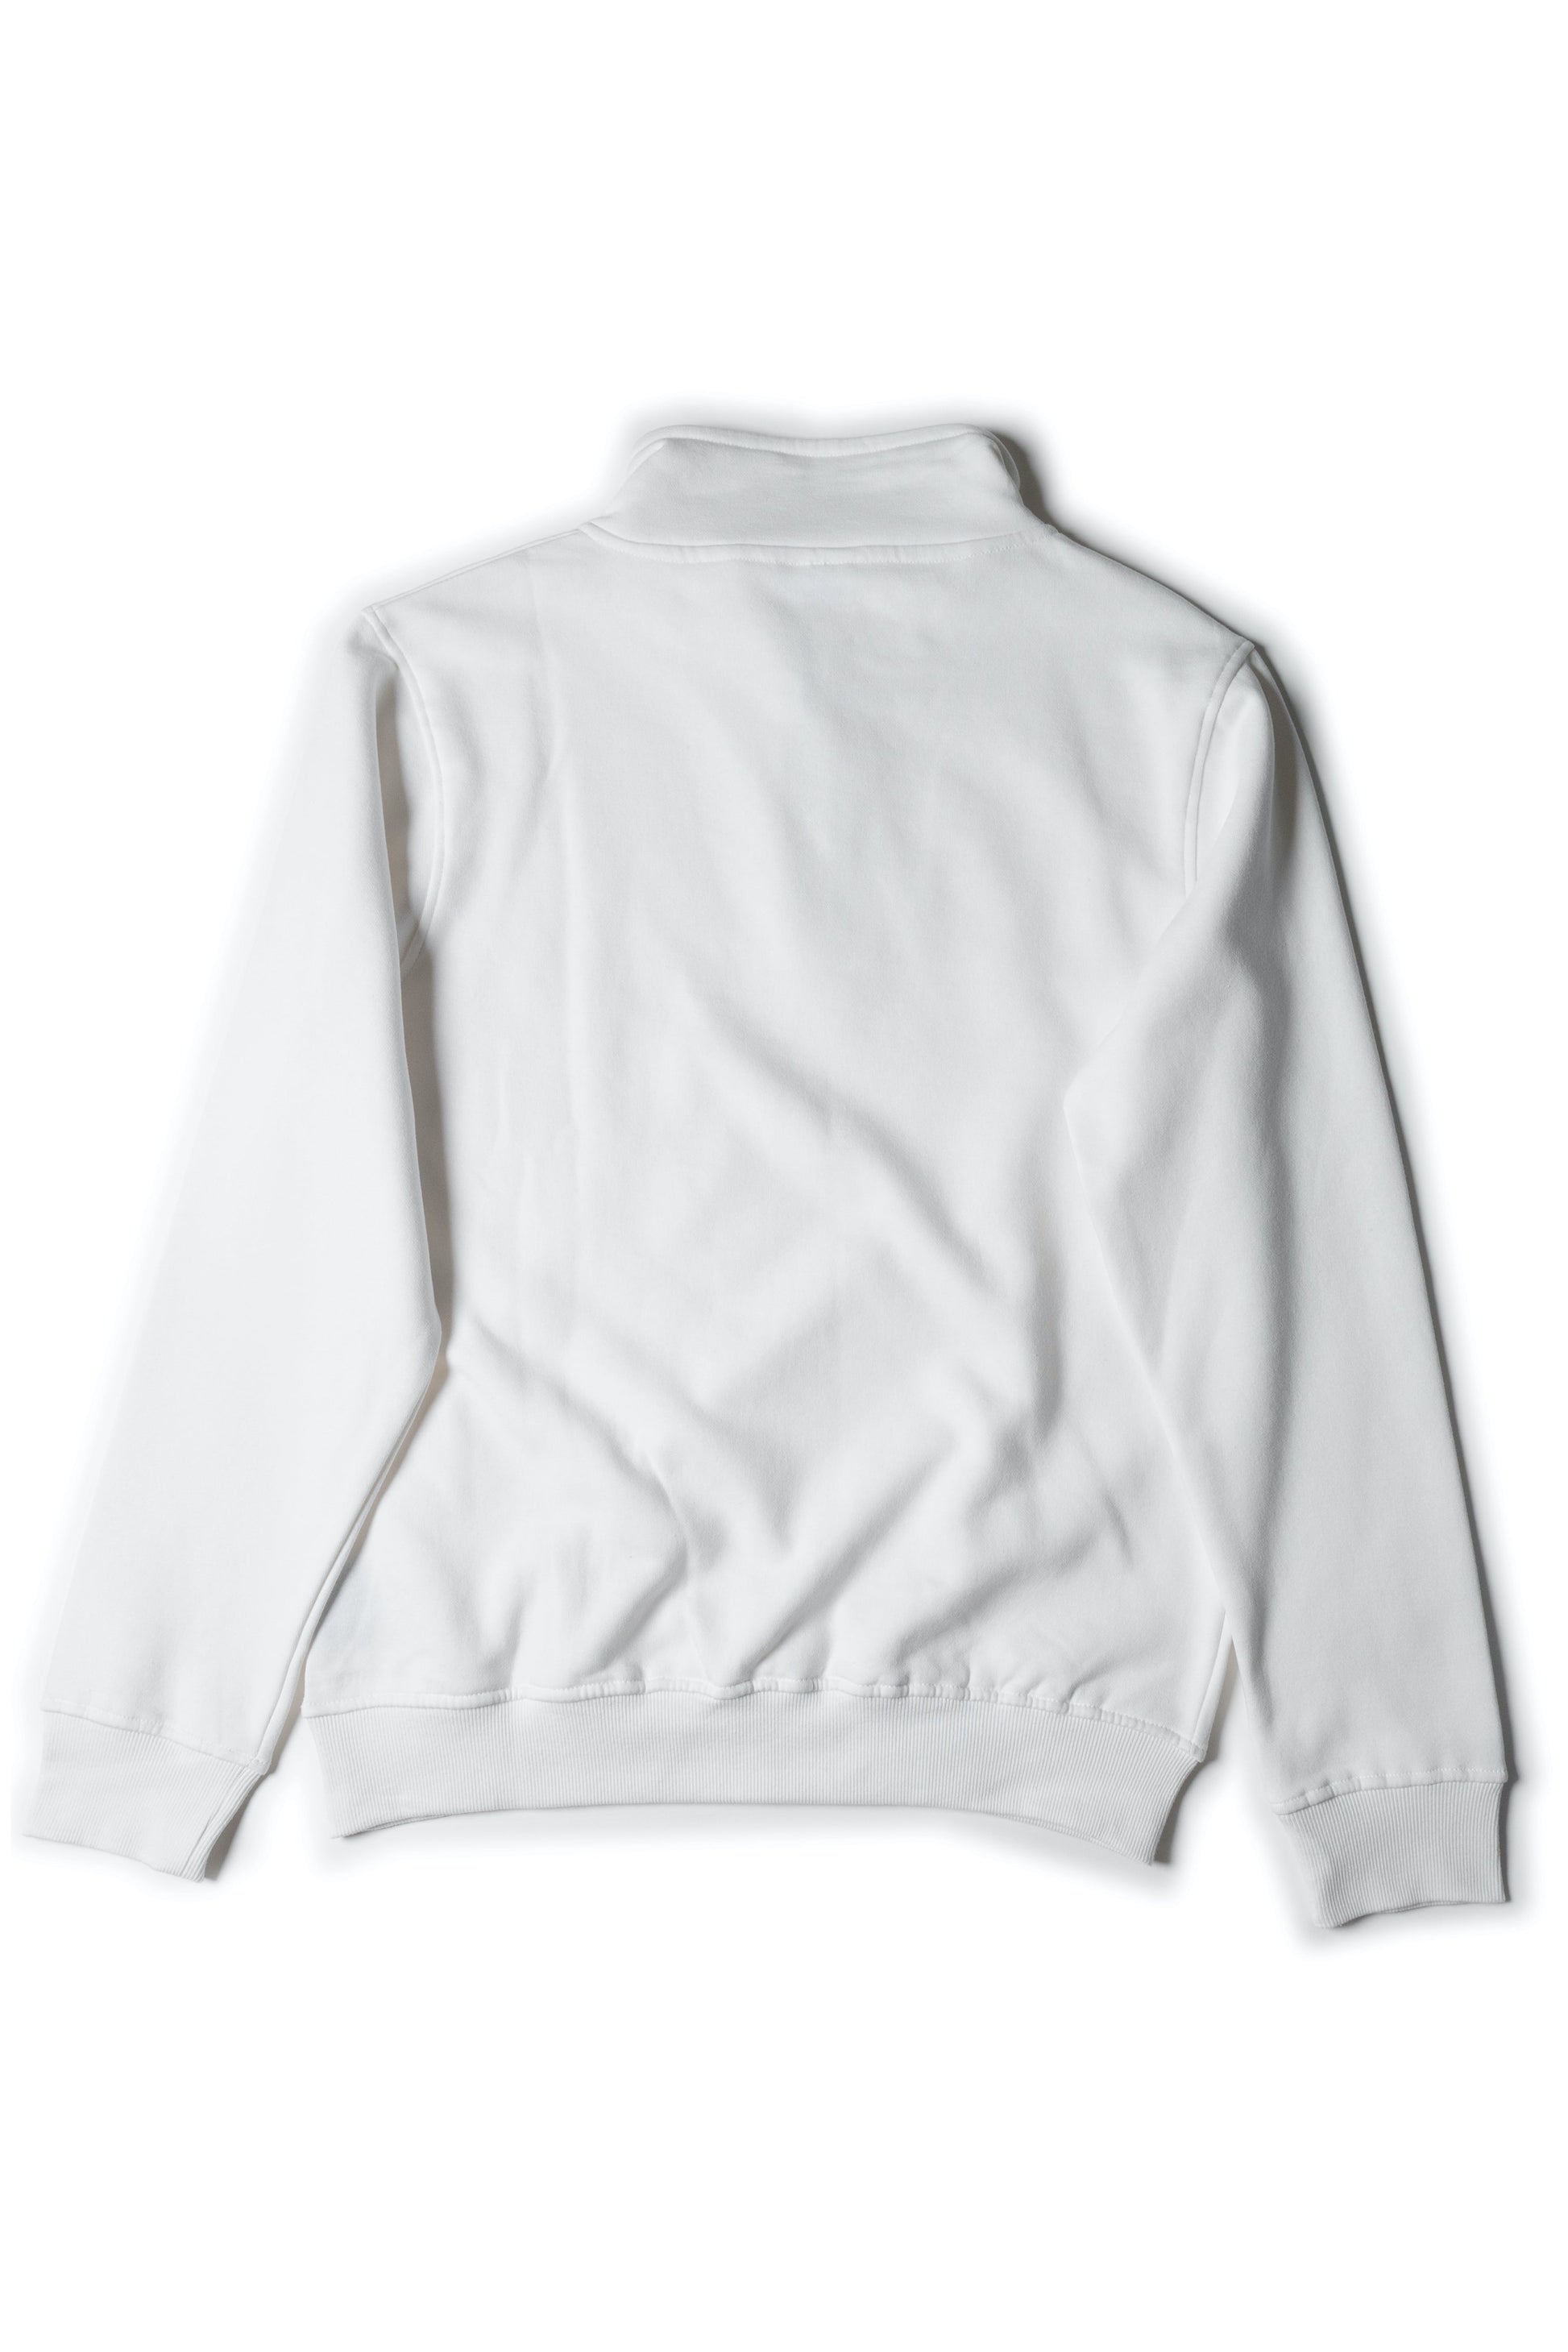 HERO-4020 Unisex Quarter Zip Sweatshirt - White Quarter-Zip